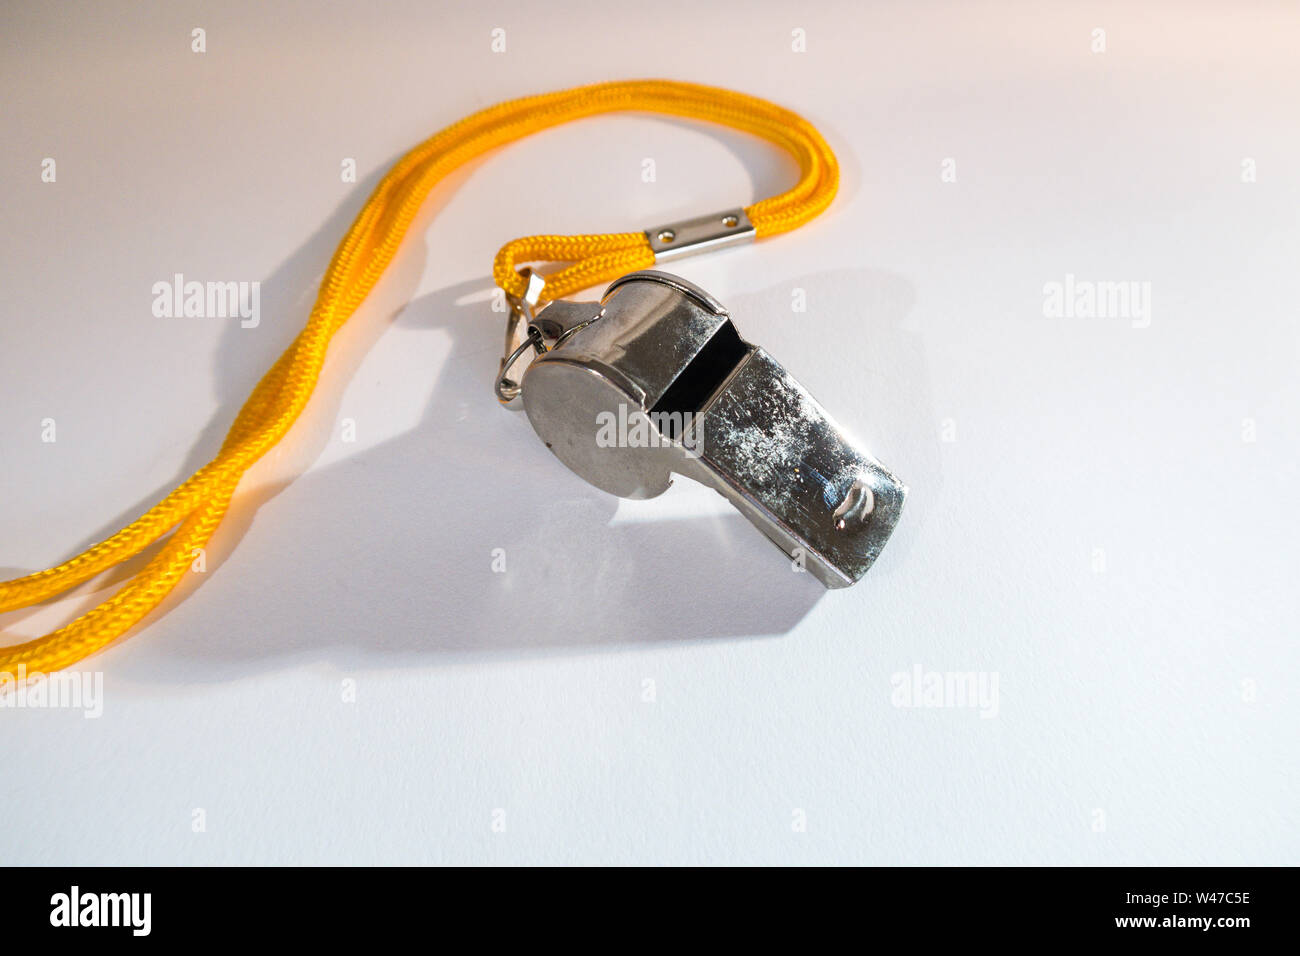 Closeup of a Metal Whistle on a Yellow Lanyard, USA Stock Photo